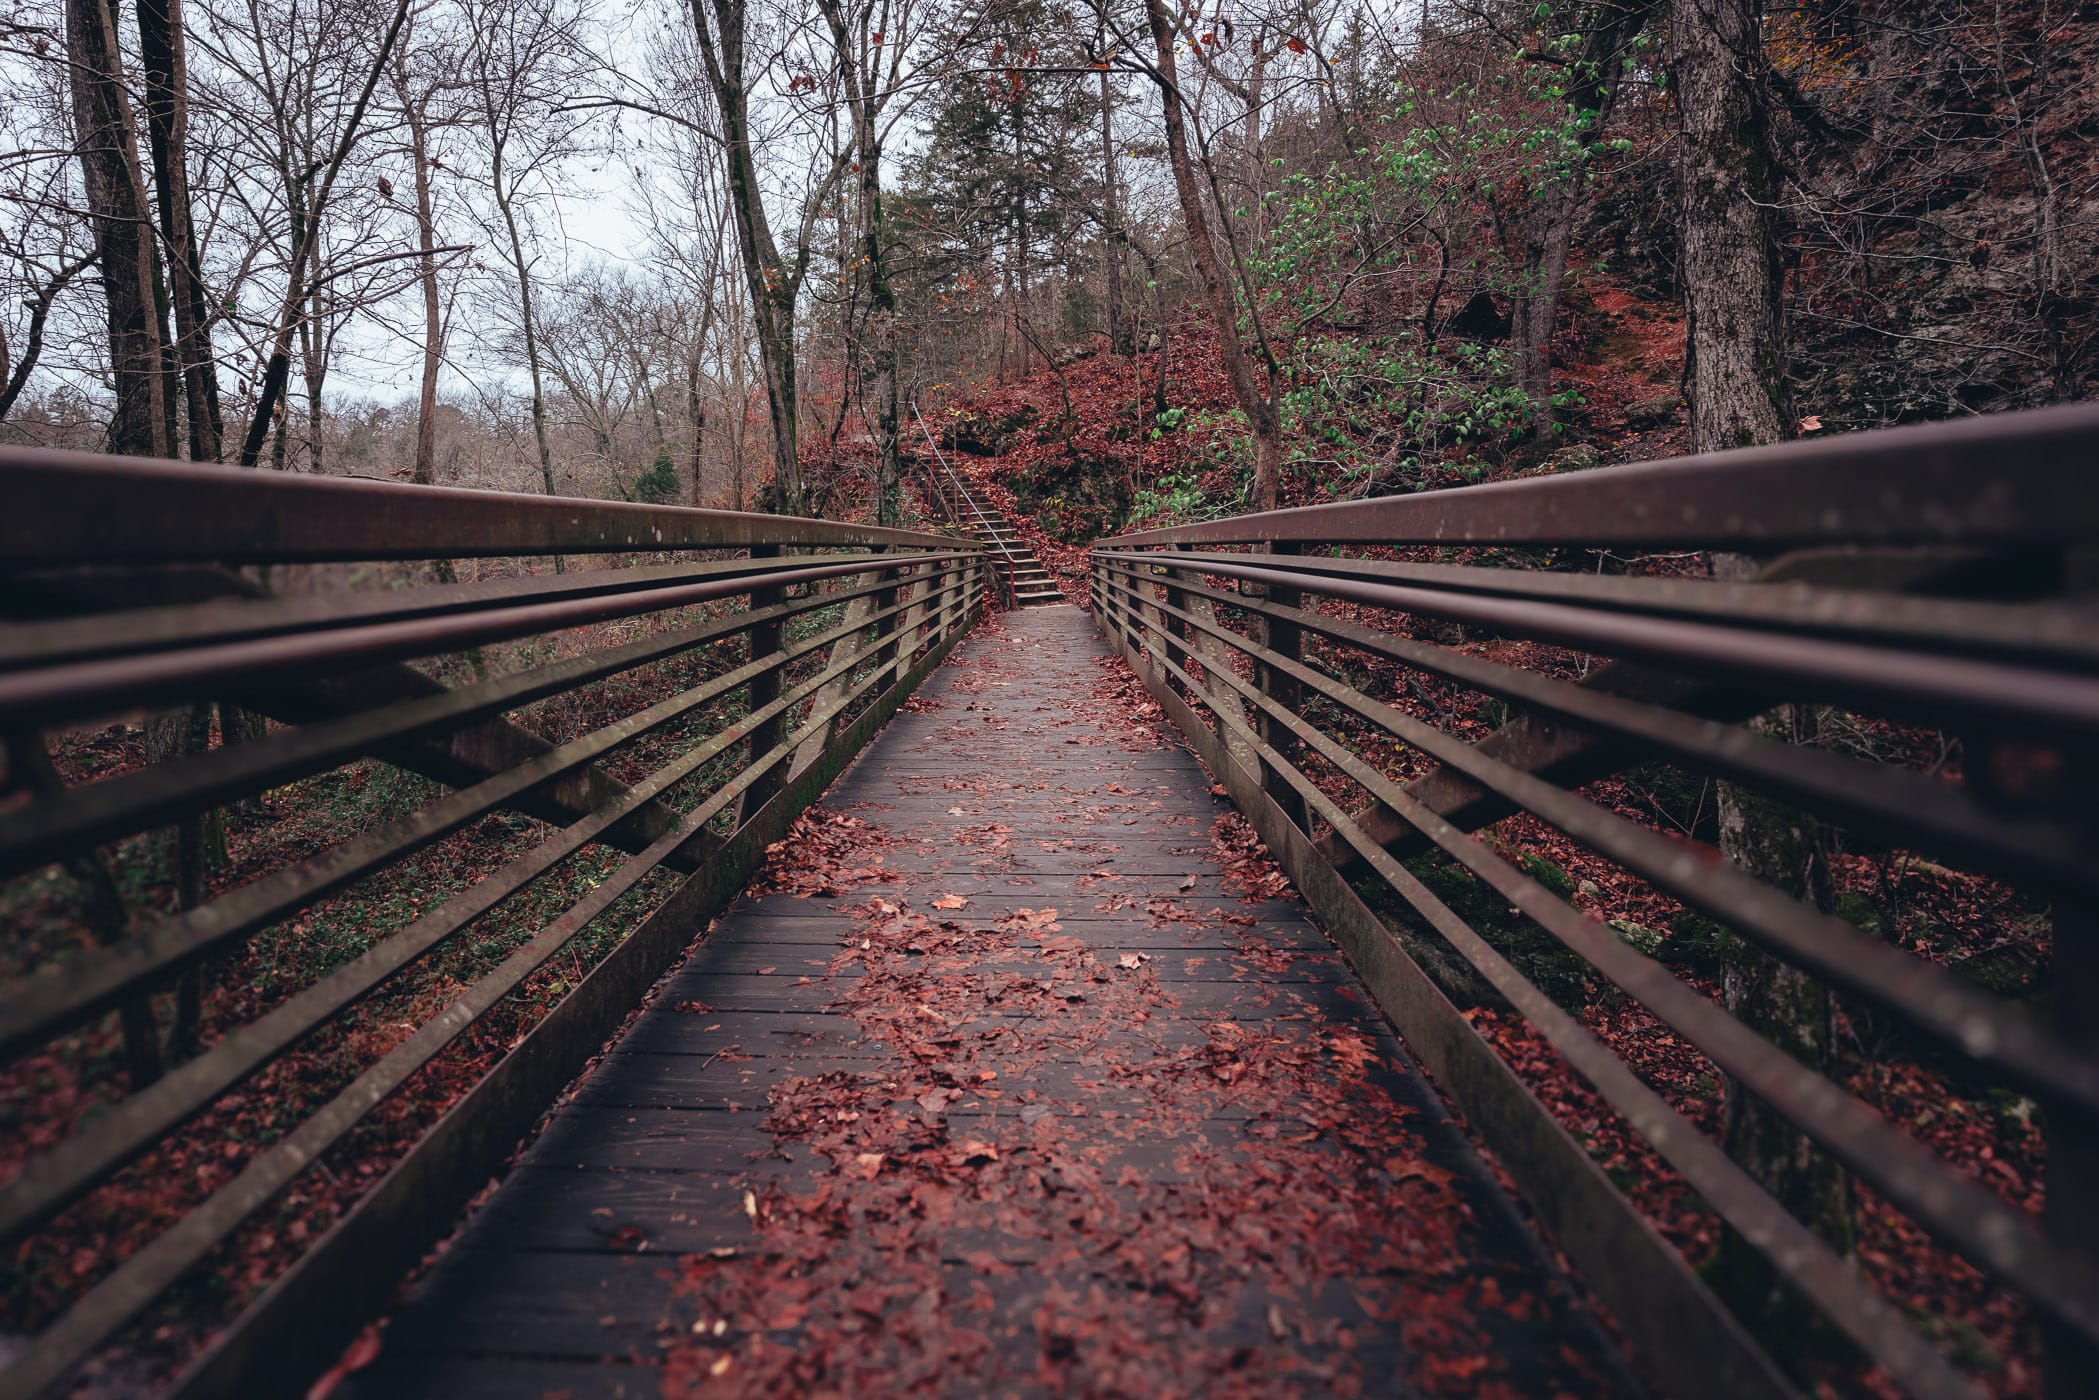 A bridge stretches through the autumn trees at Oklahoma's Natural Falls State Park.